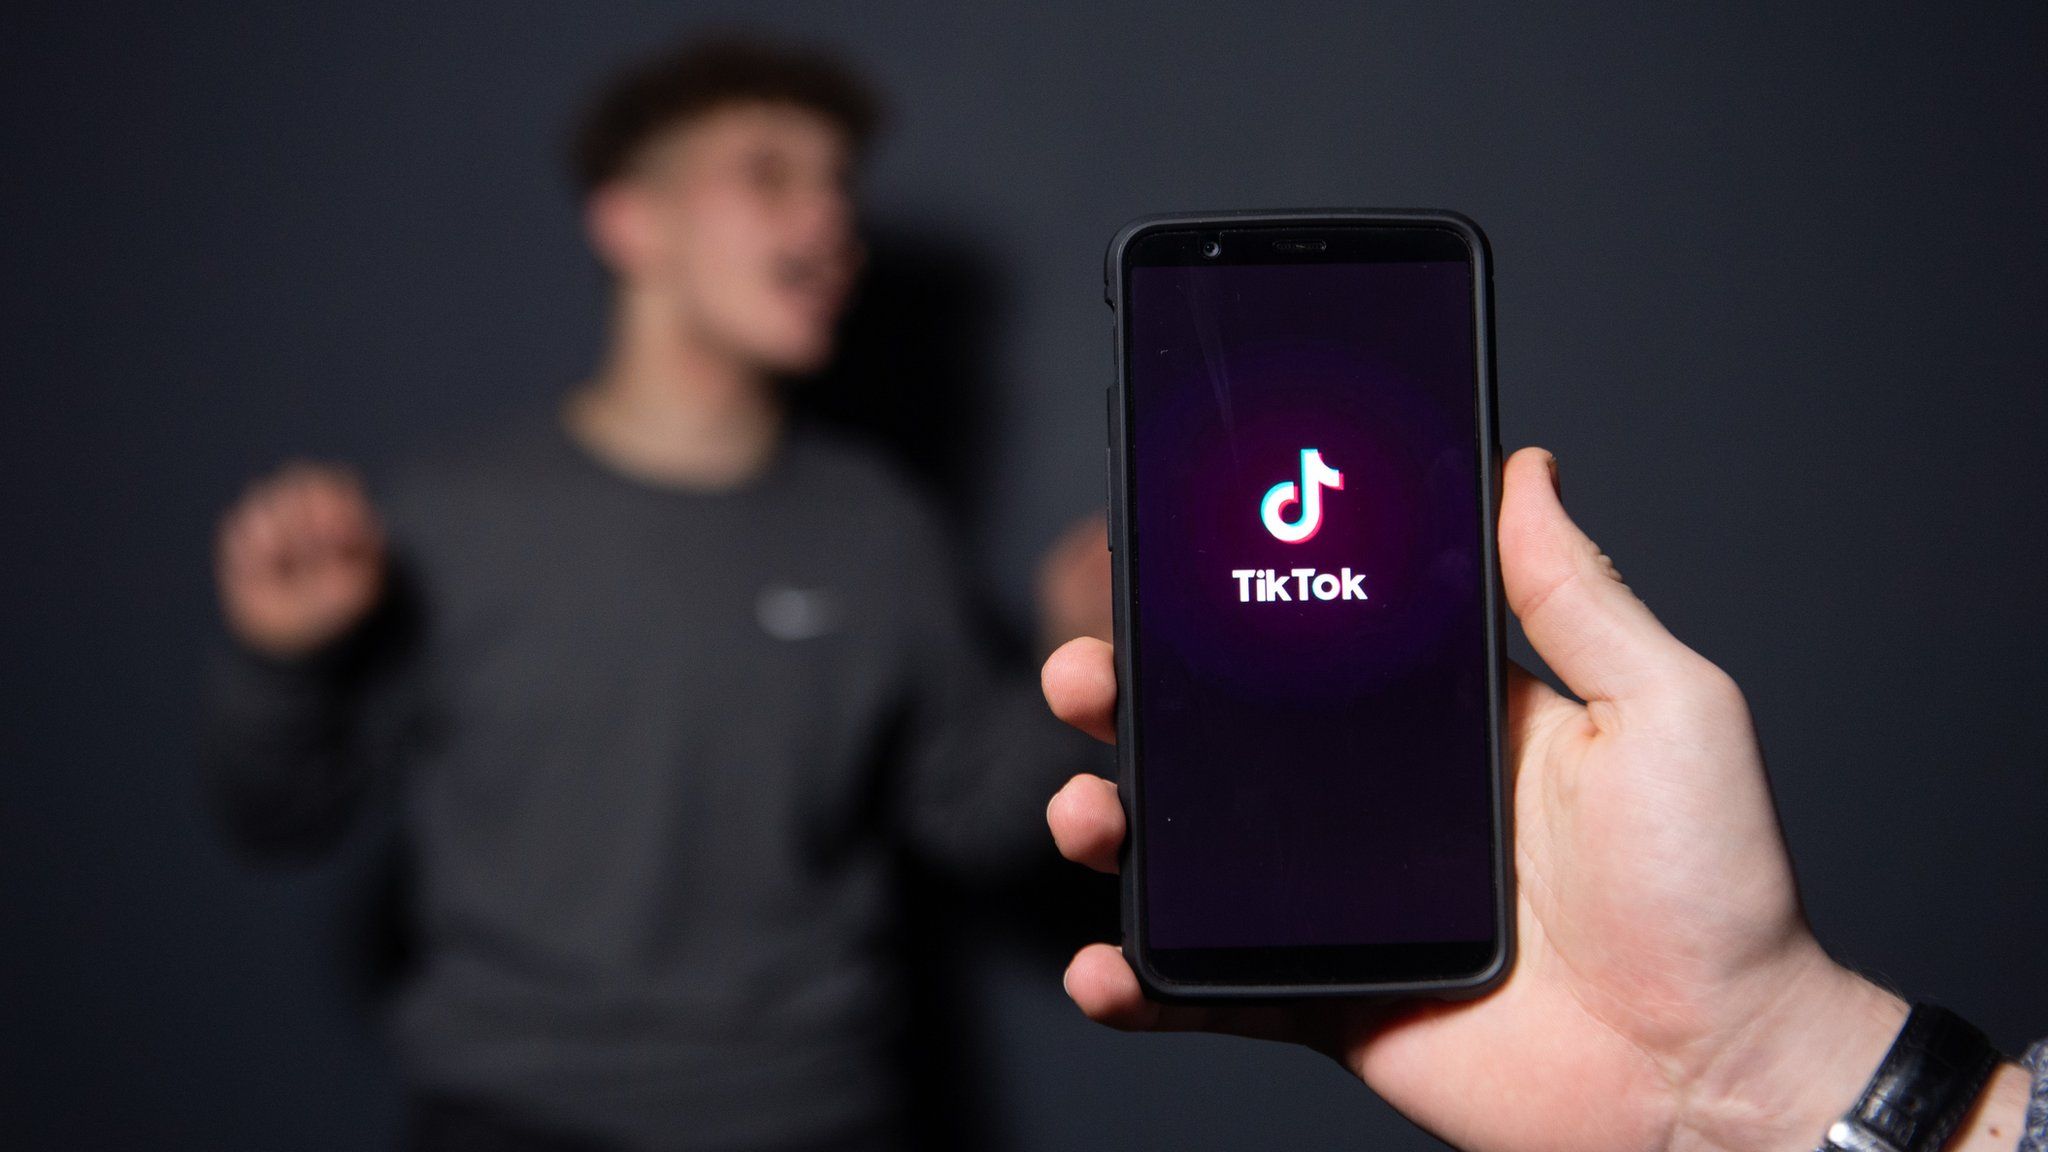 Tik Tok app